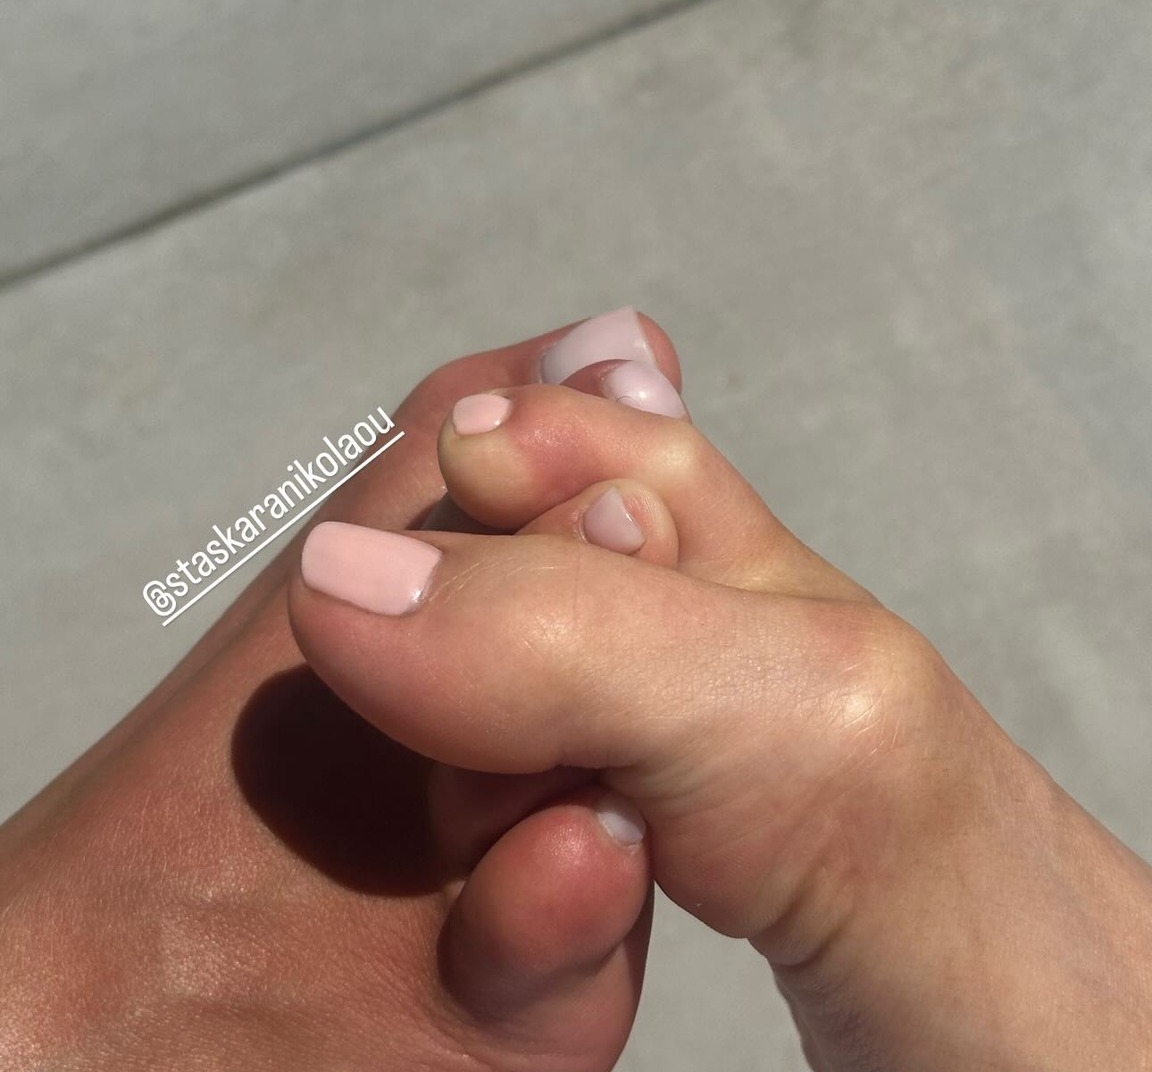 Anastasia Karanikolaou and Kylie Jenner showing their toes